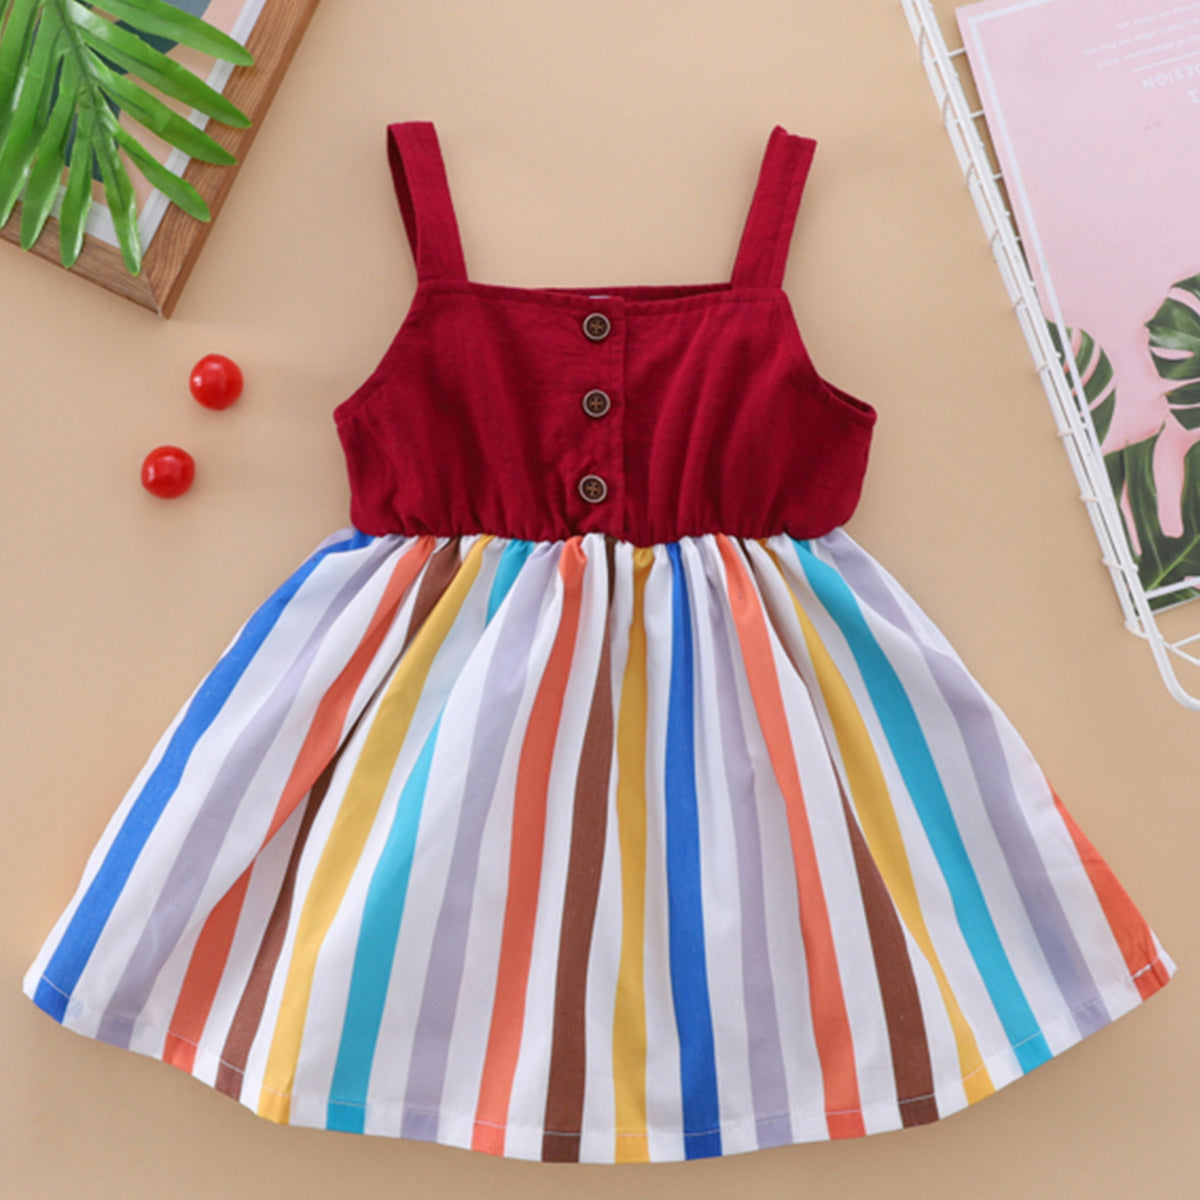 Kids Stylish Designer Red Lining Frock & Dresses for Baby Girl.